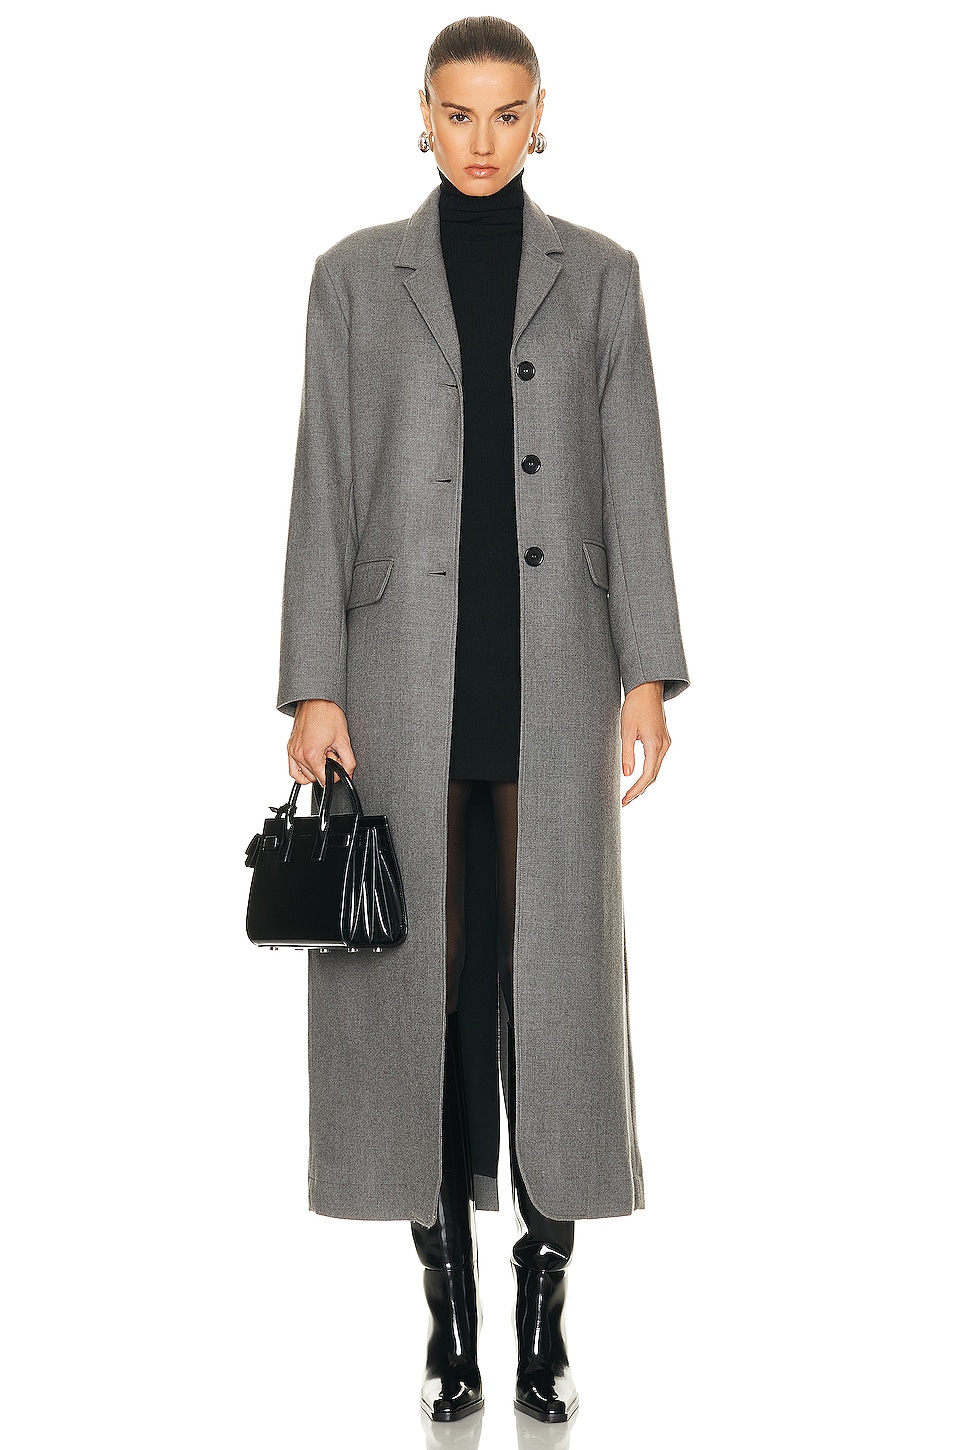 Celine Extra Long Slim Fit Coat in Grey